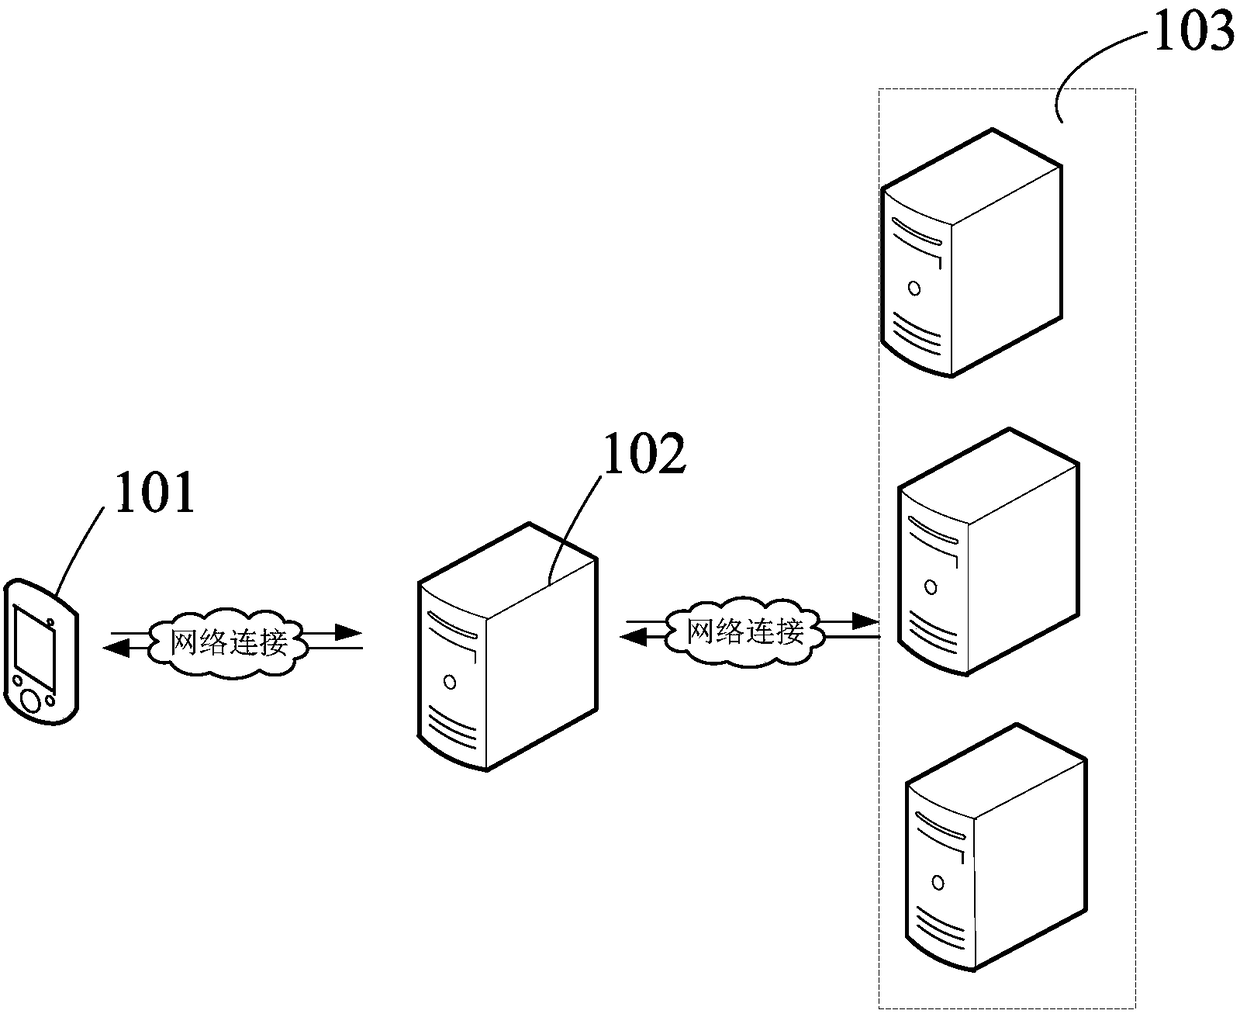 Data processing method and apparatus